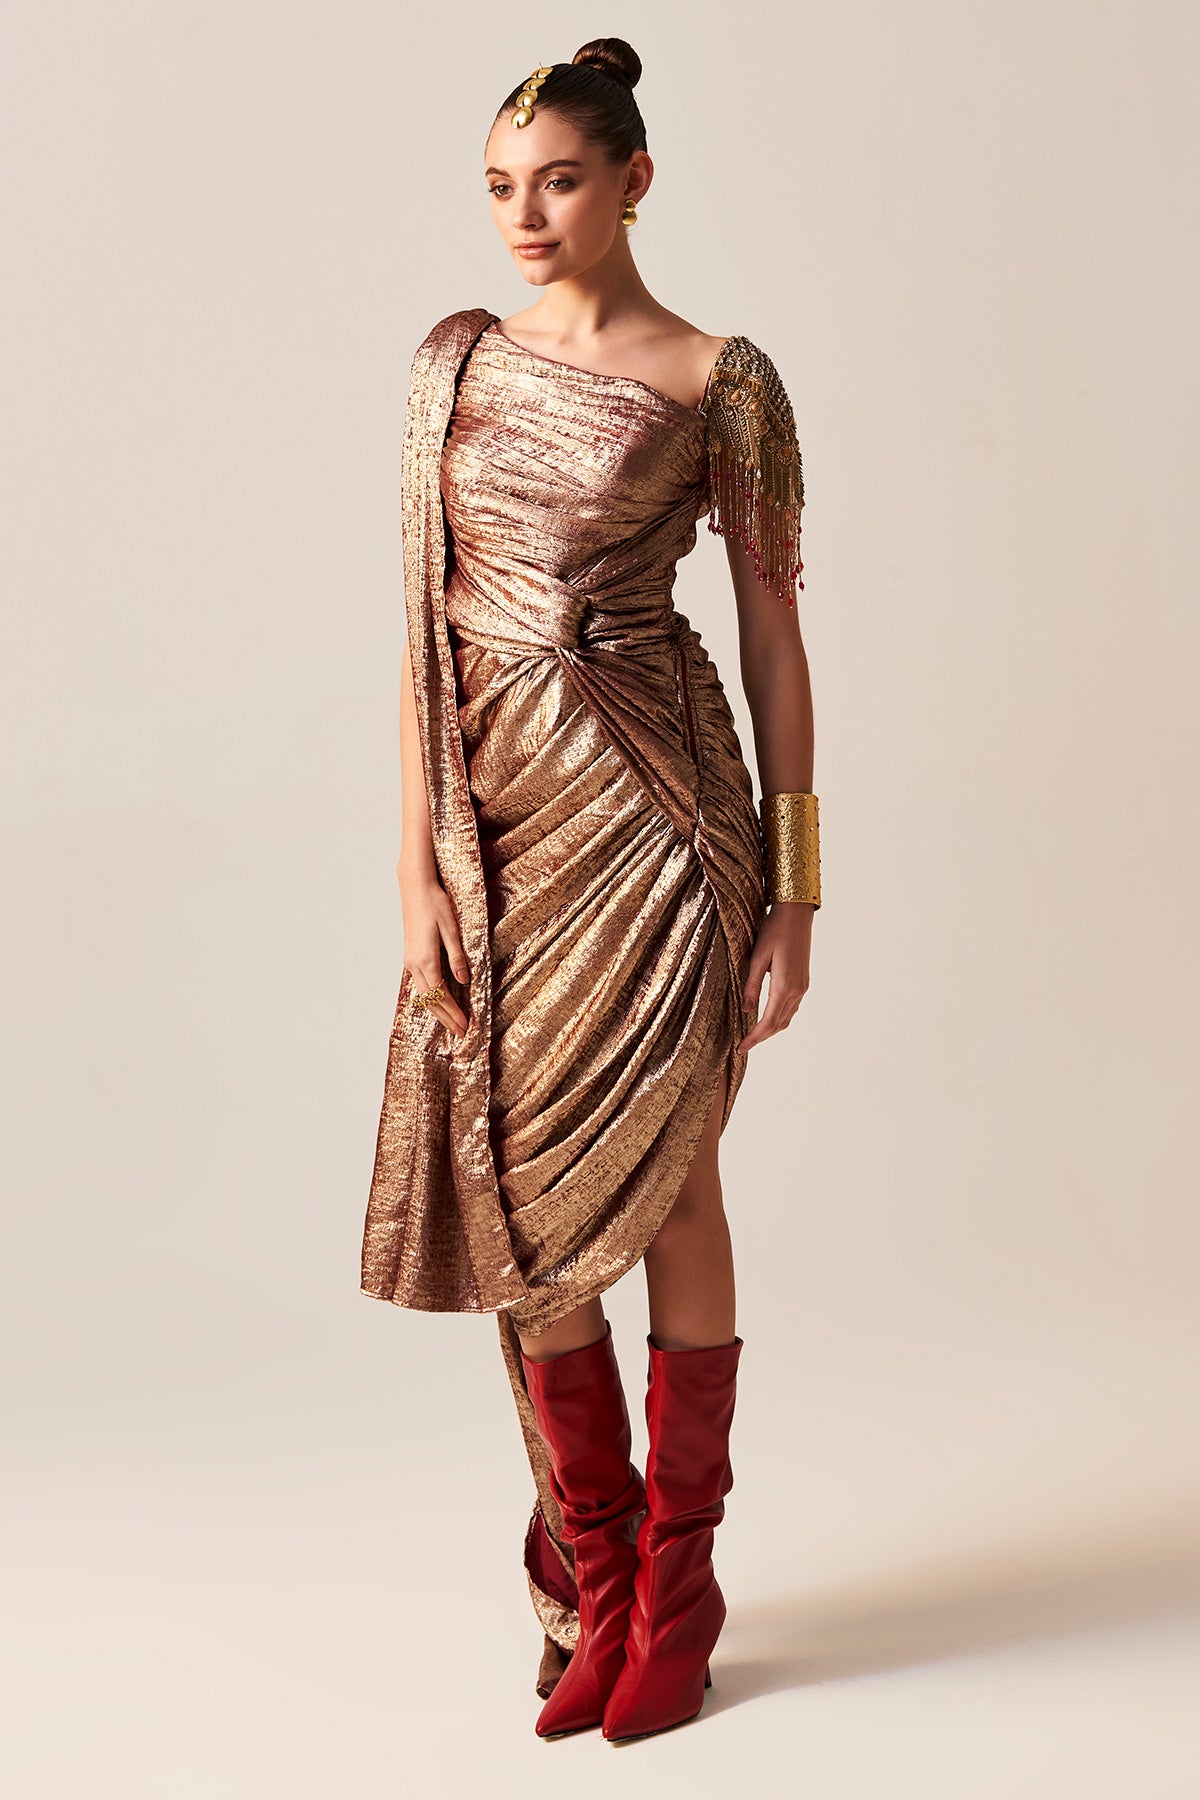 Metallic Red Indo Fusion Drape Motif Dress